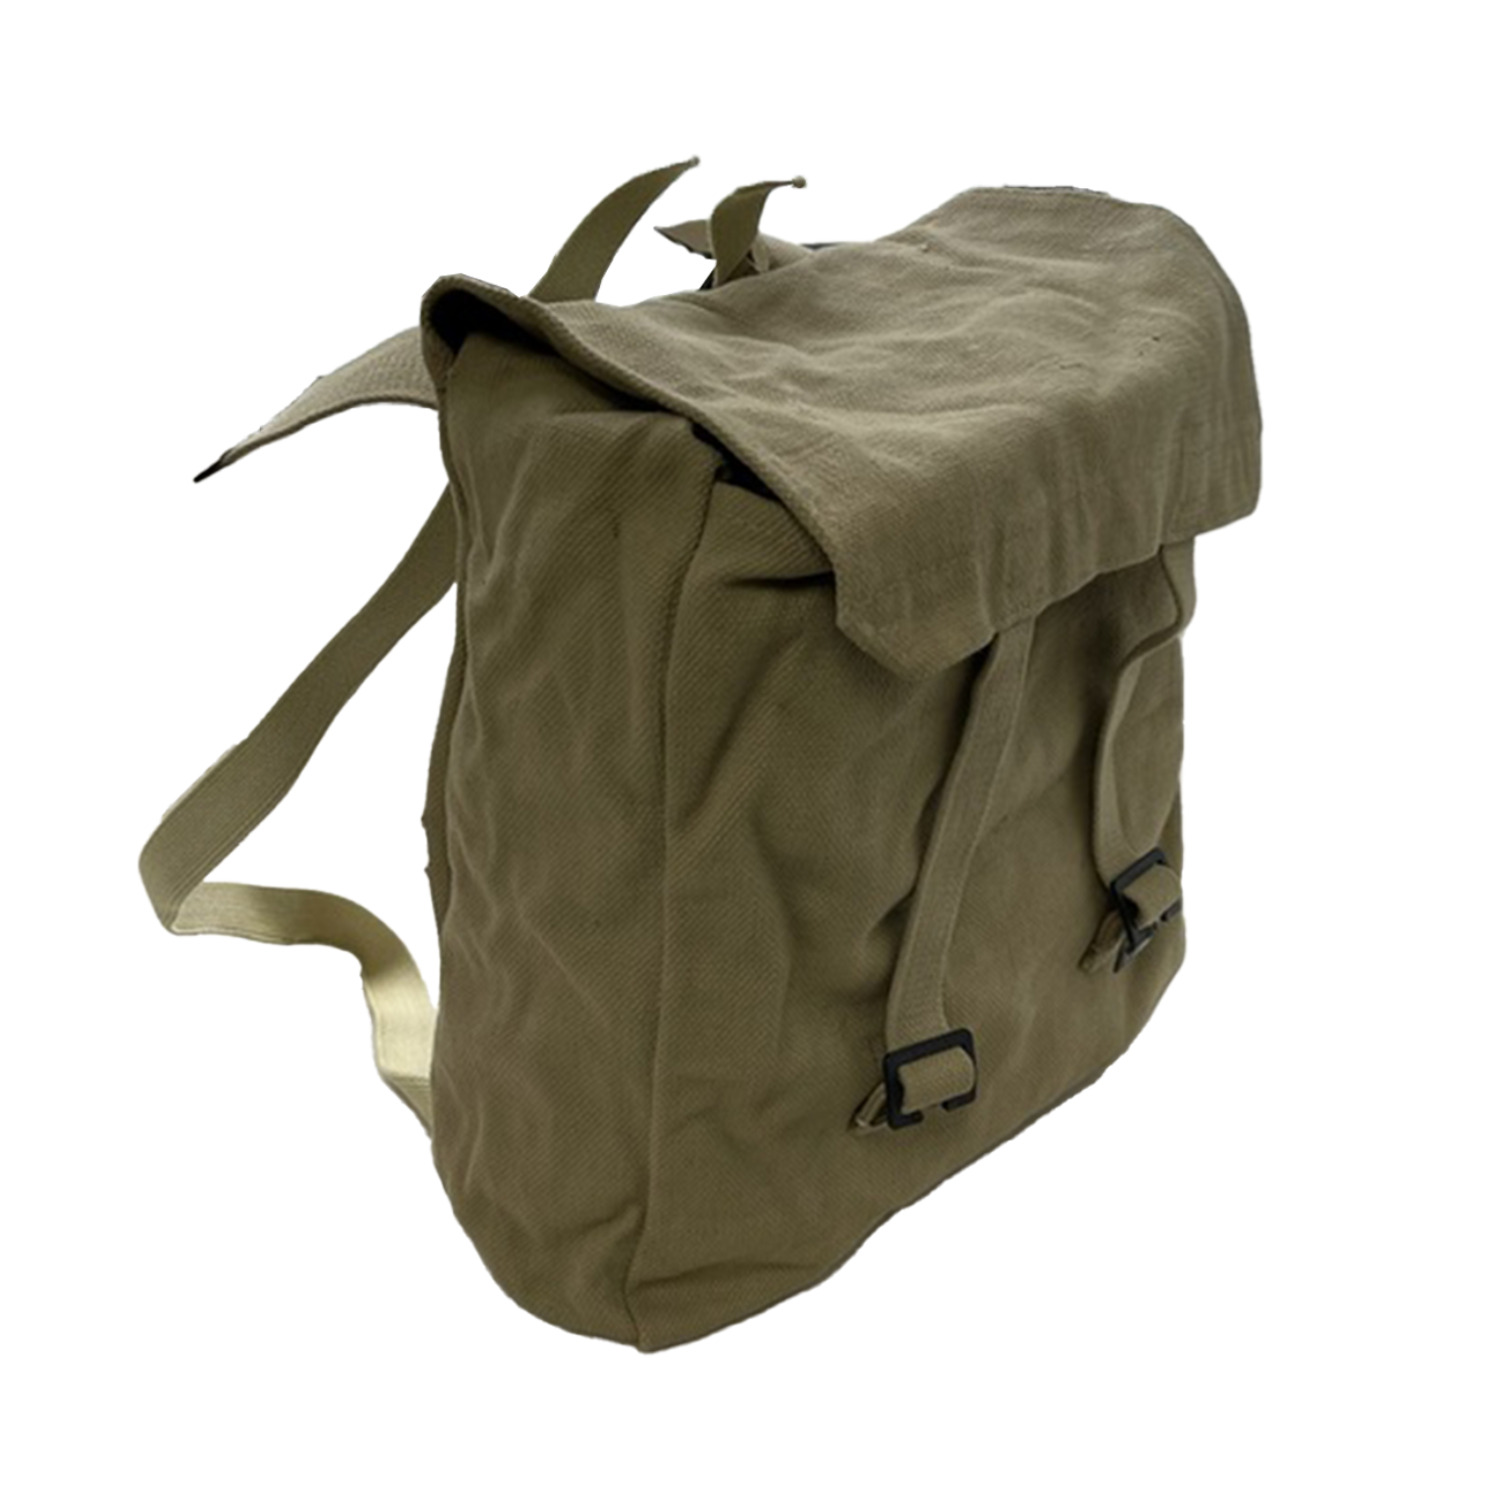 Genuine Military Surplus Israeli Khaki Canvas Backpack / Shoulder Bag with Zahal